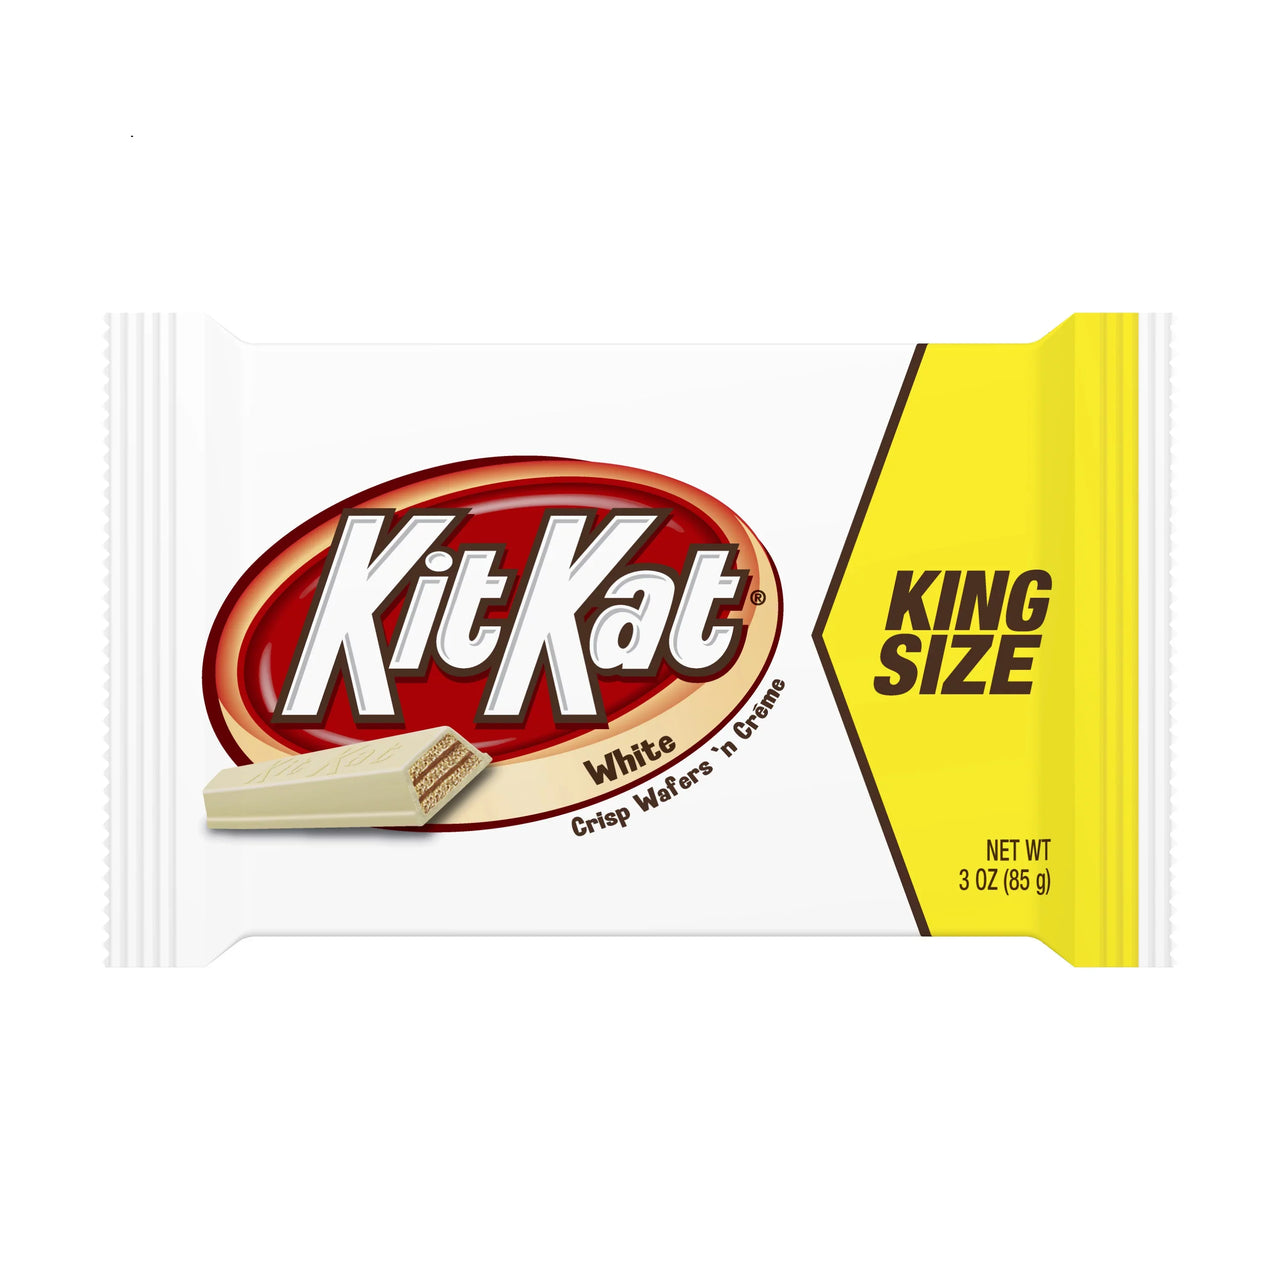 Kitkat White King Size (85g)